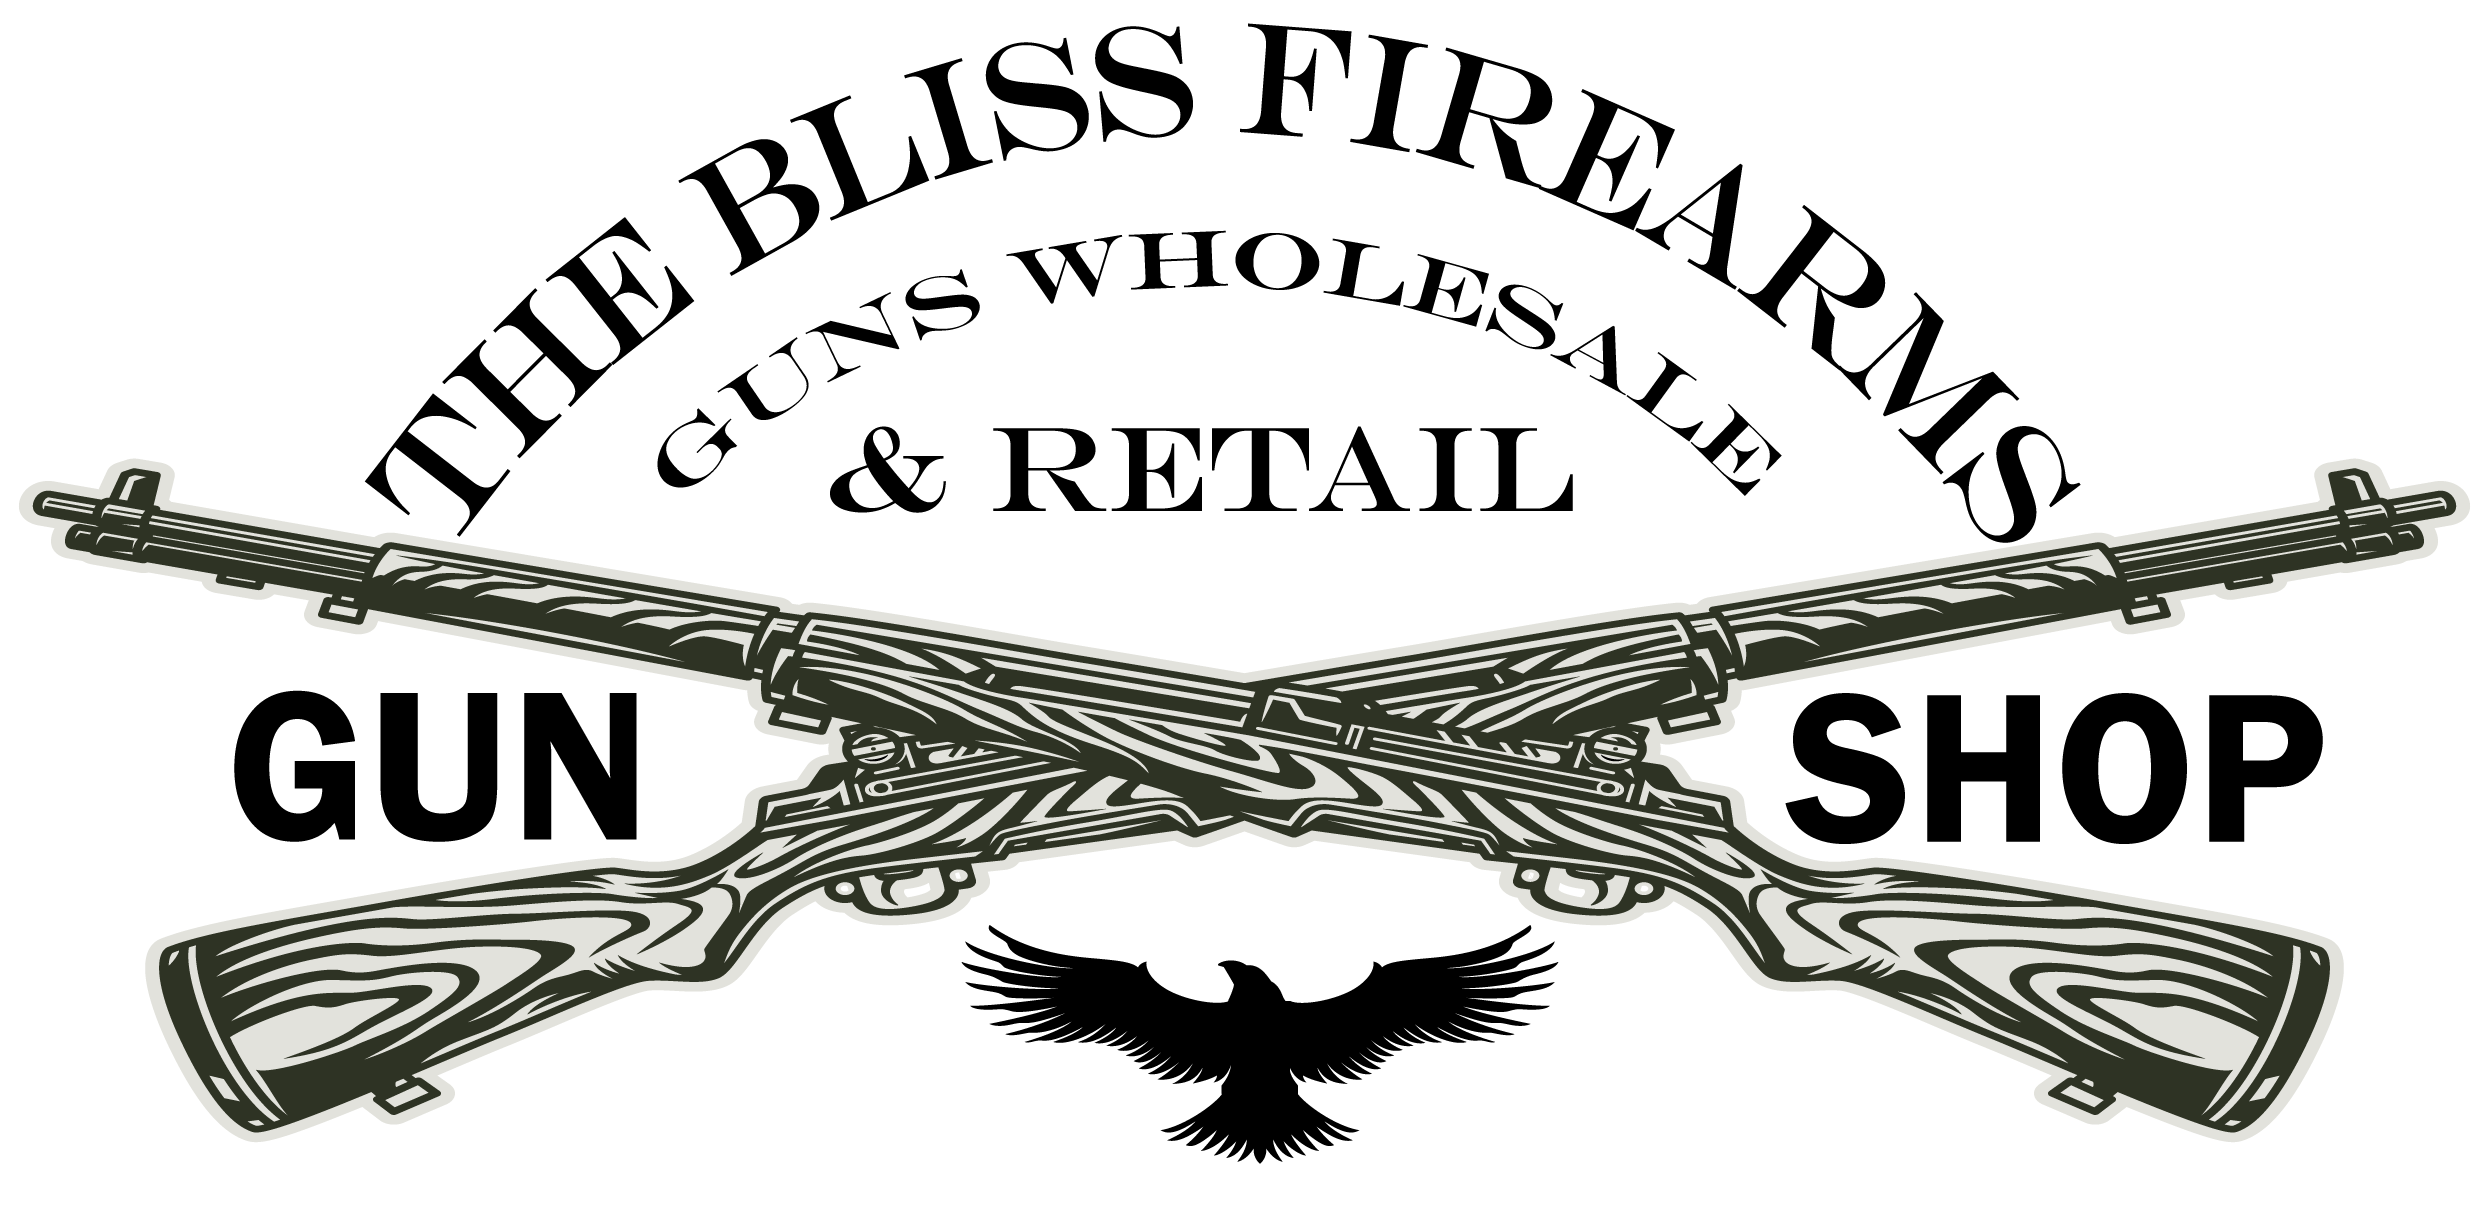 The Bliss Firearms Shop